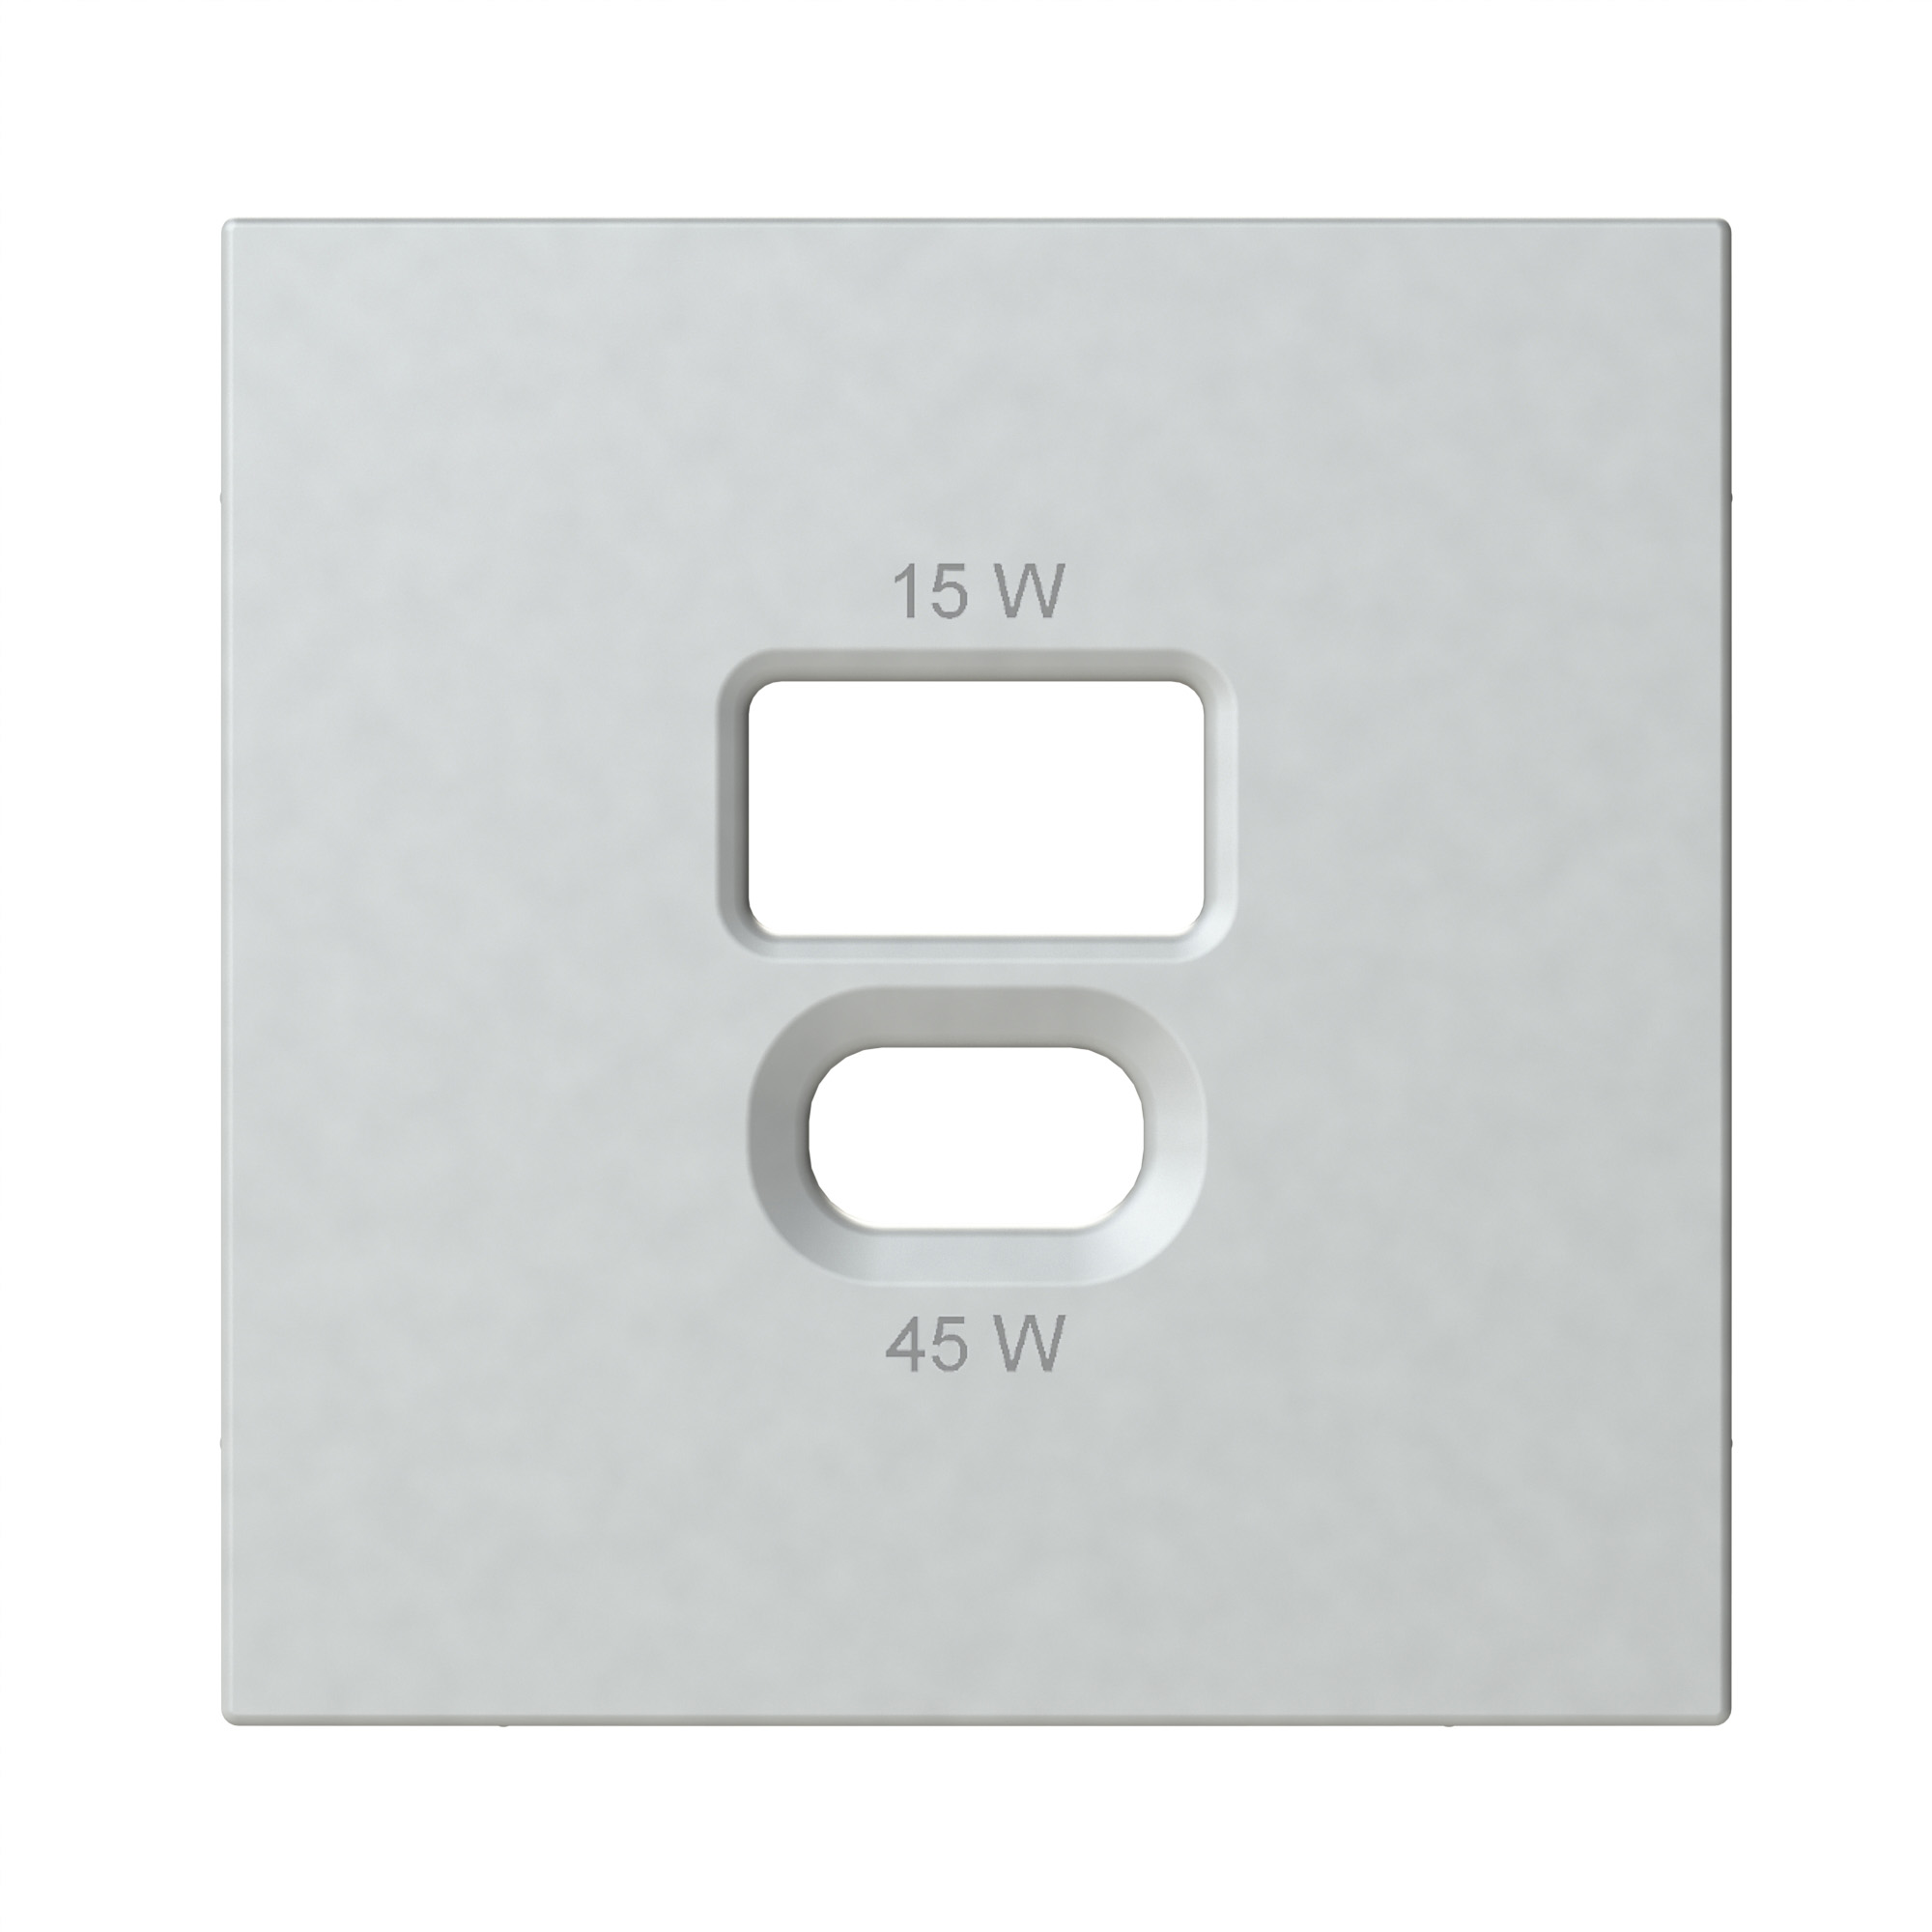 OPUS 55 Abdeckplatte USB-A/C Steckdose, 45 W, 15 W, alu-silber-seidenglanz 